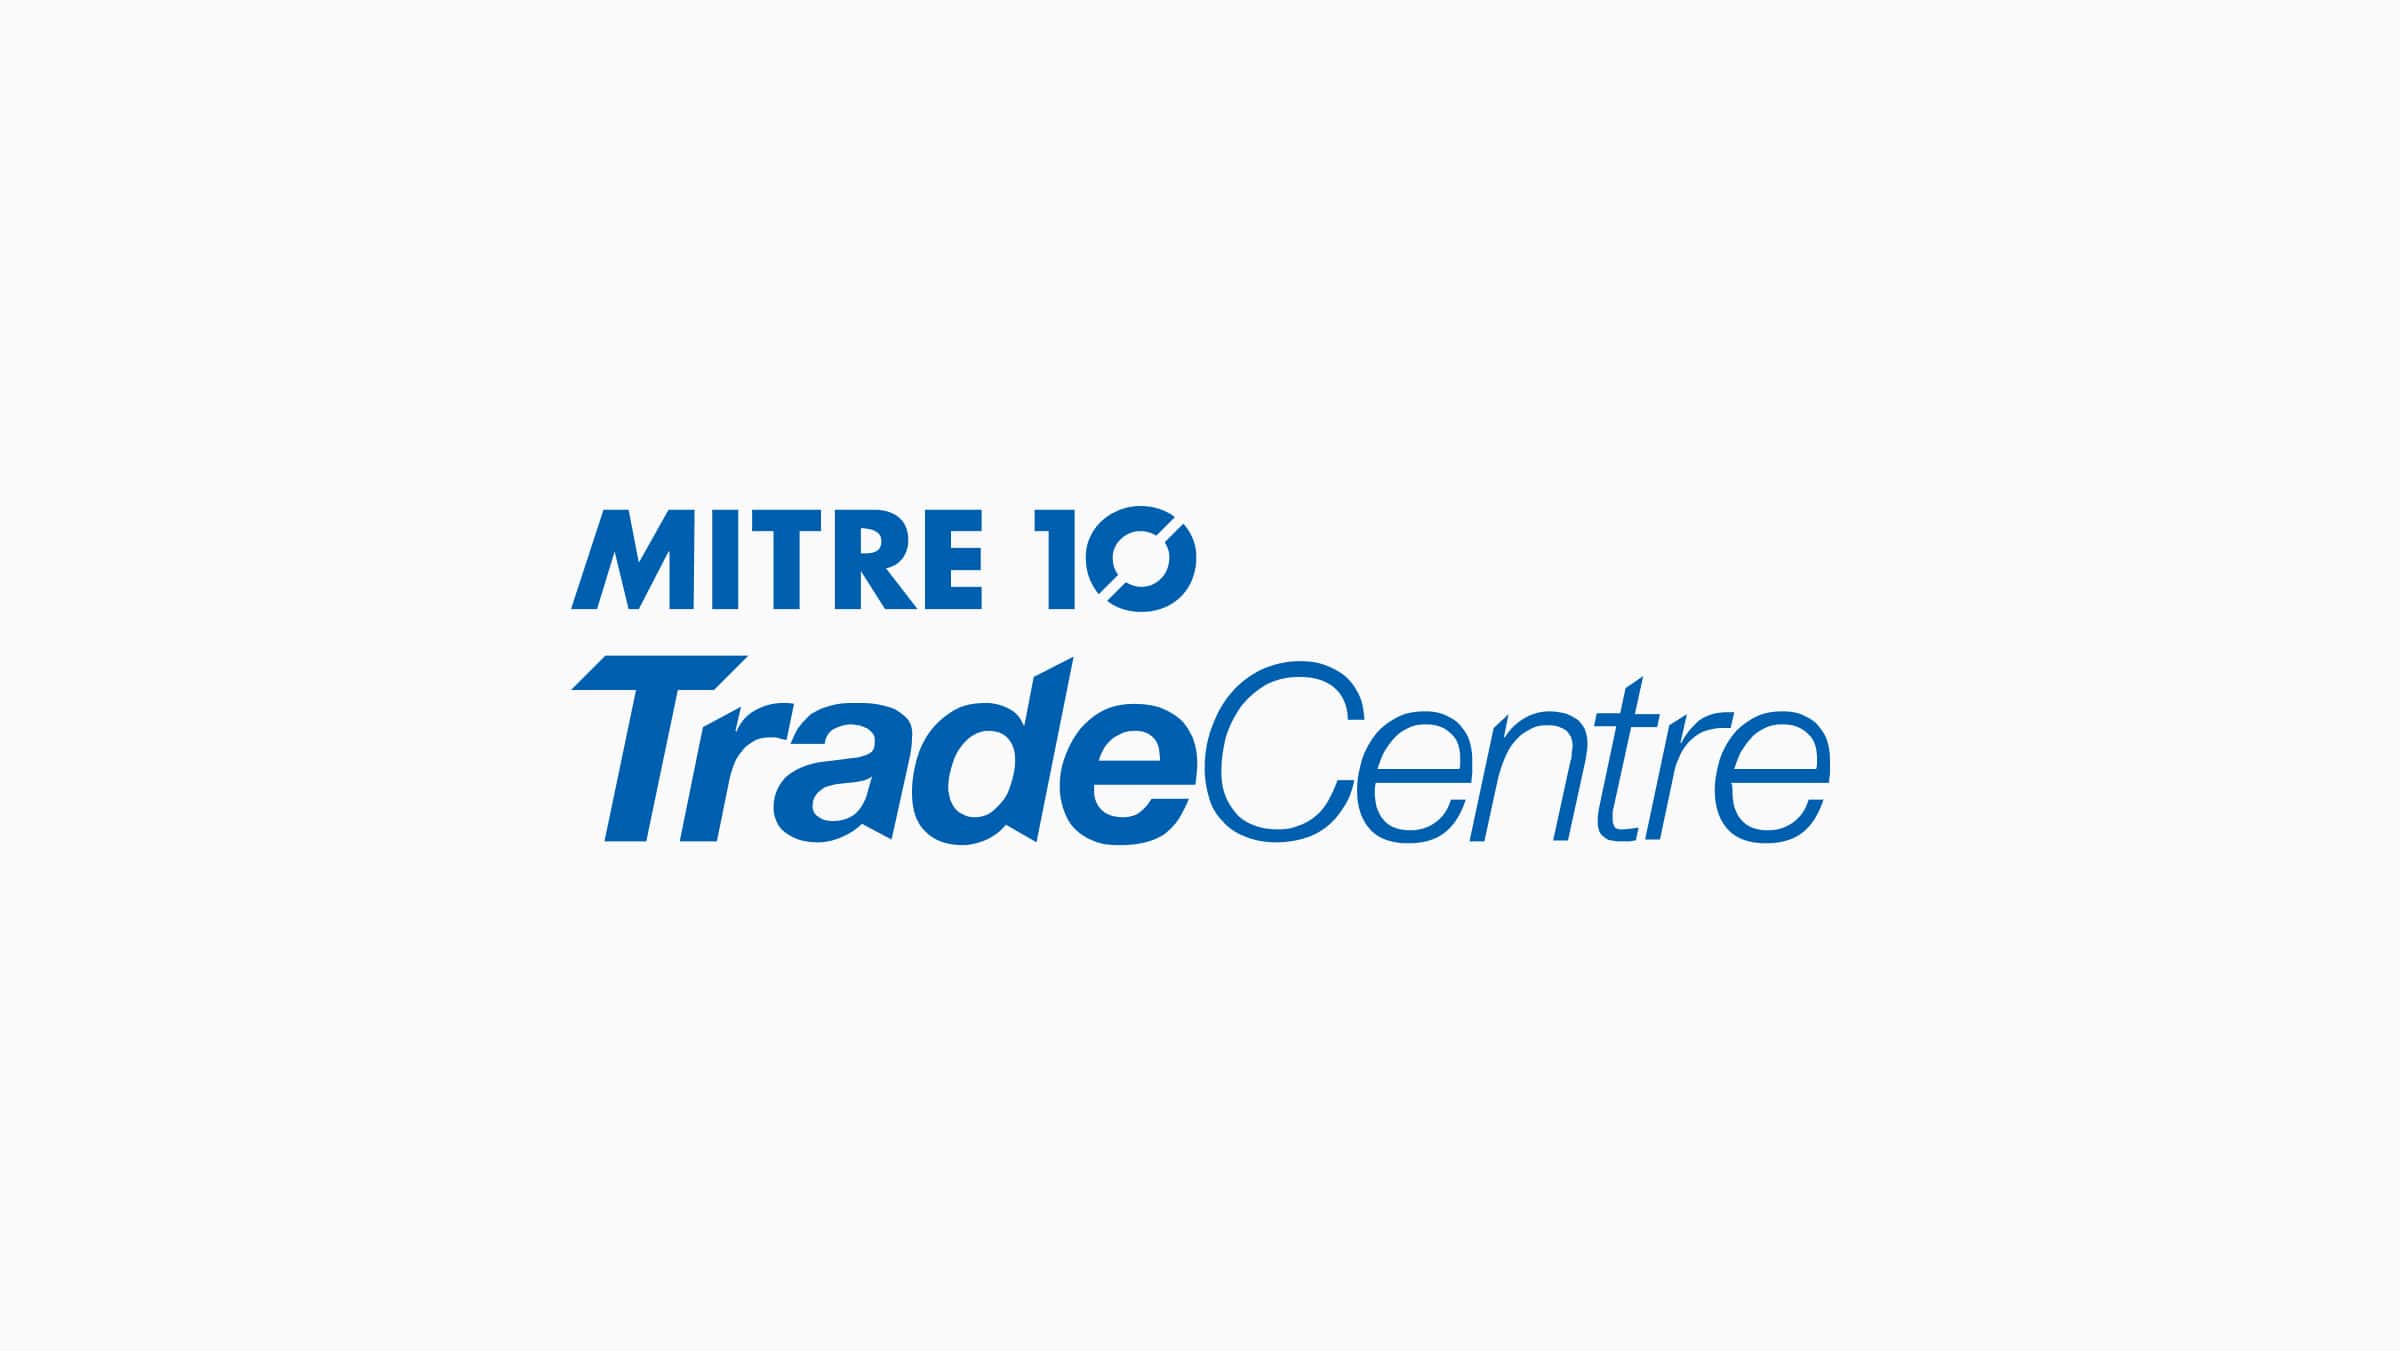 The Mitre 10 TradeCentre logo